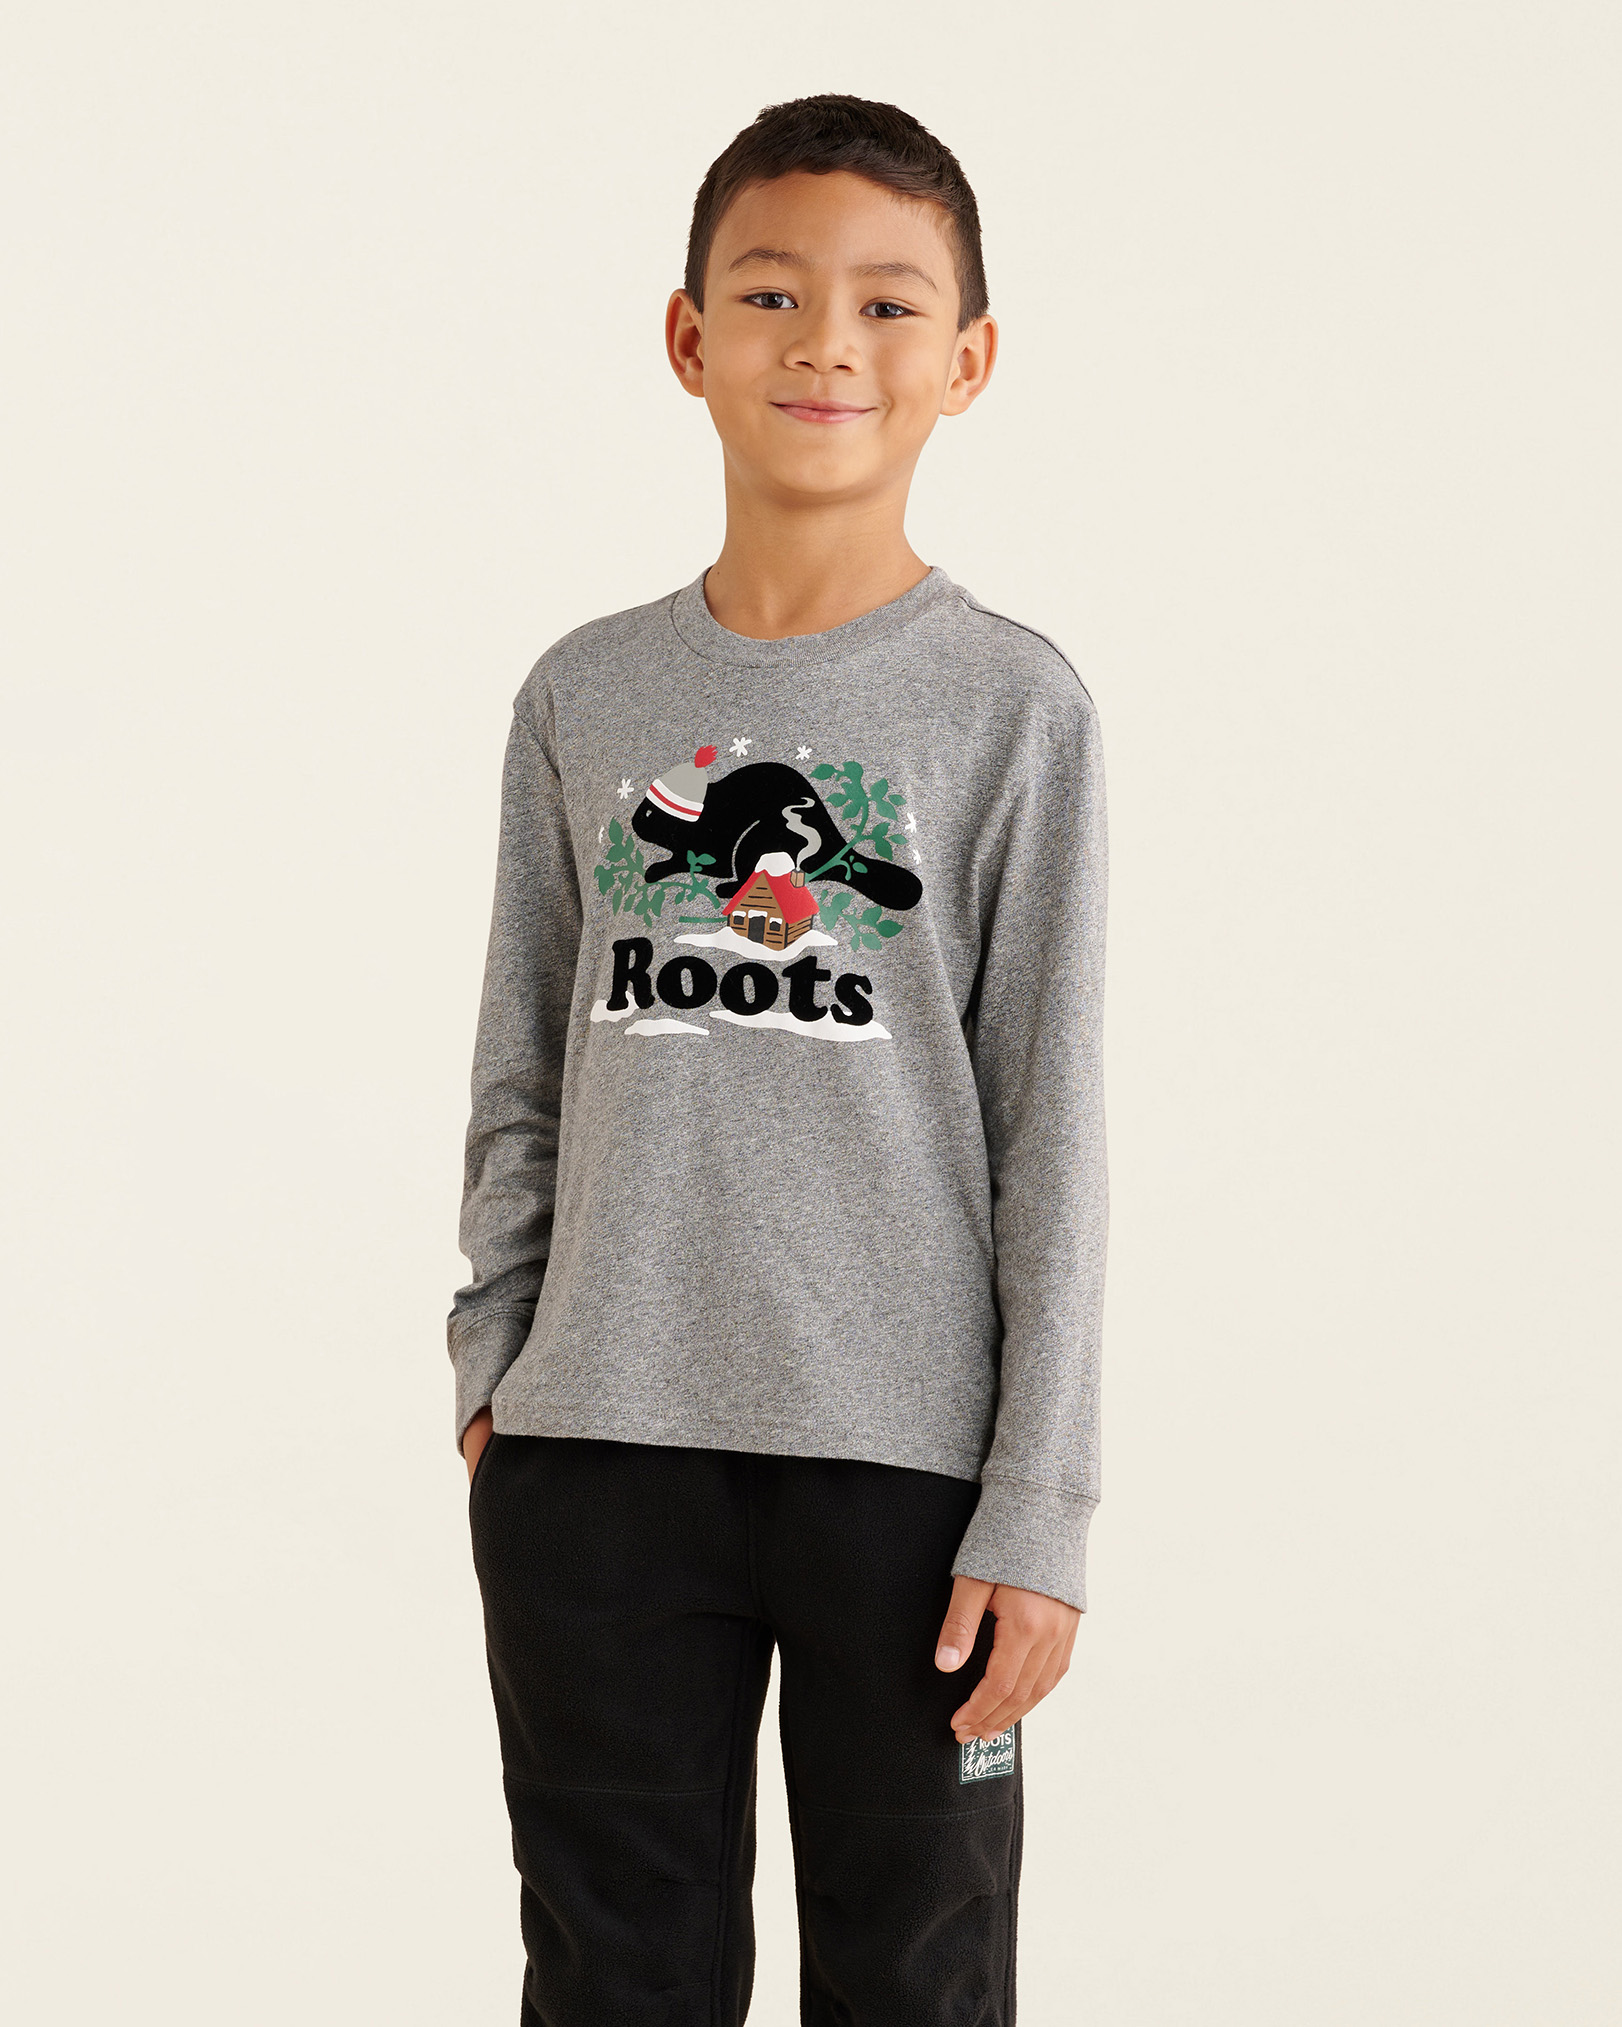 Roots Kids Winter Cooper T-Shirt in Salt/Pepper